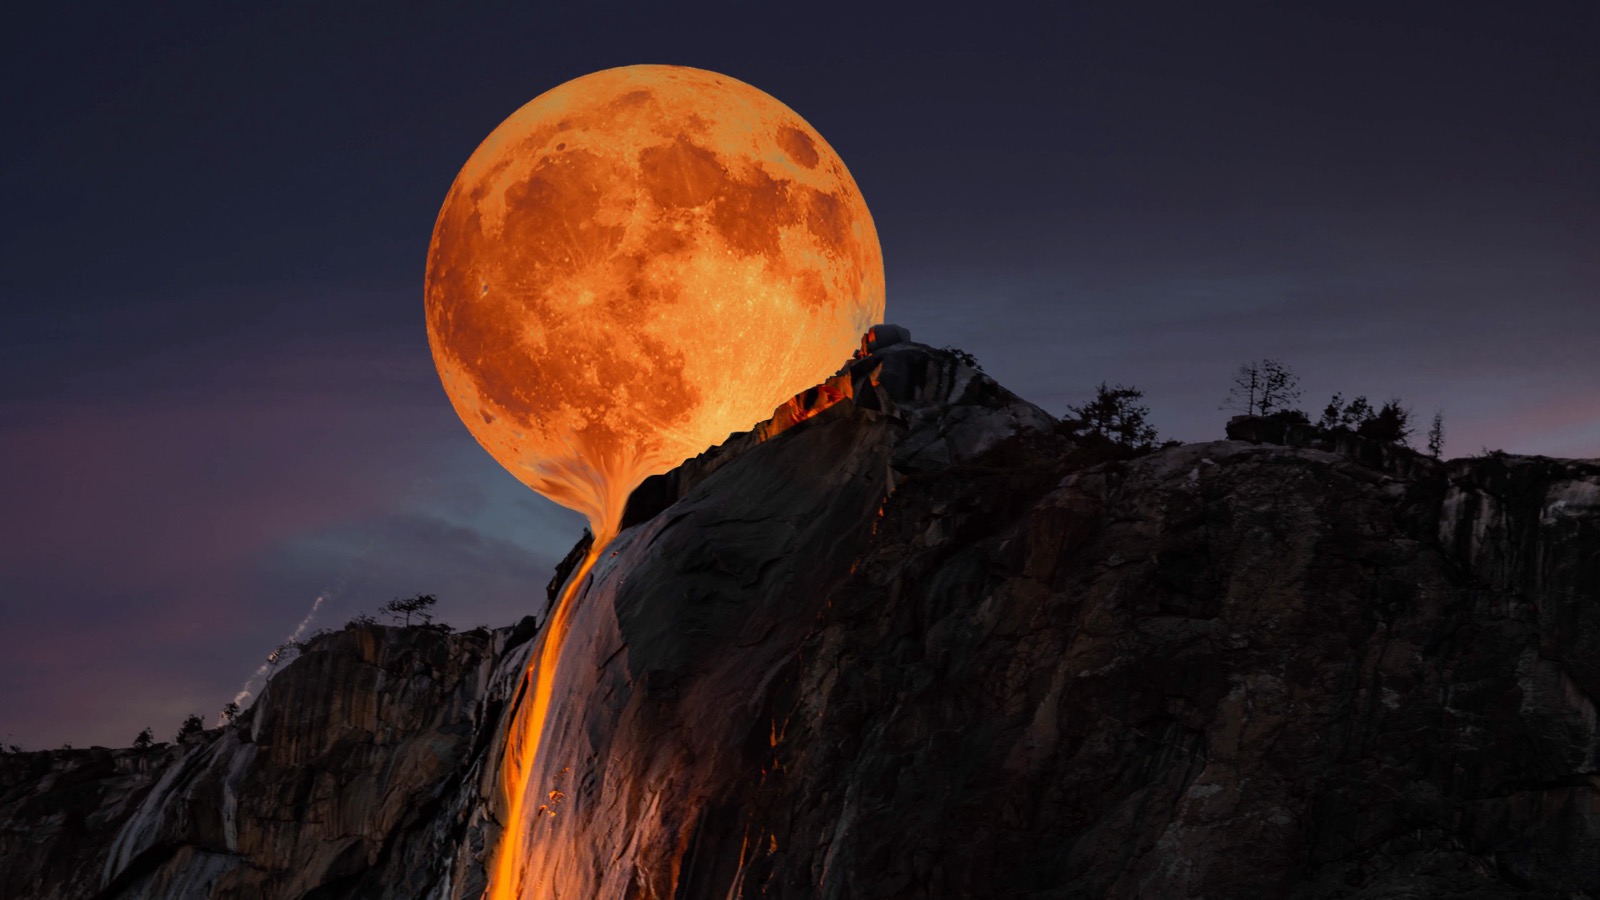 Yosemite Moon melting